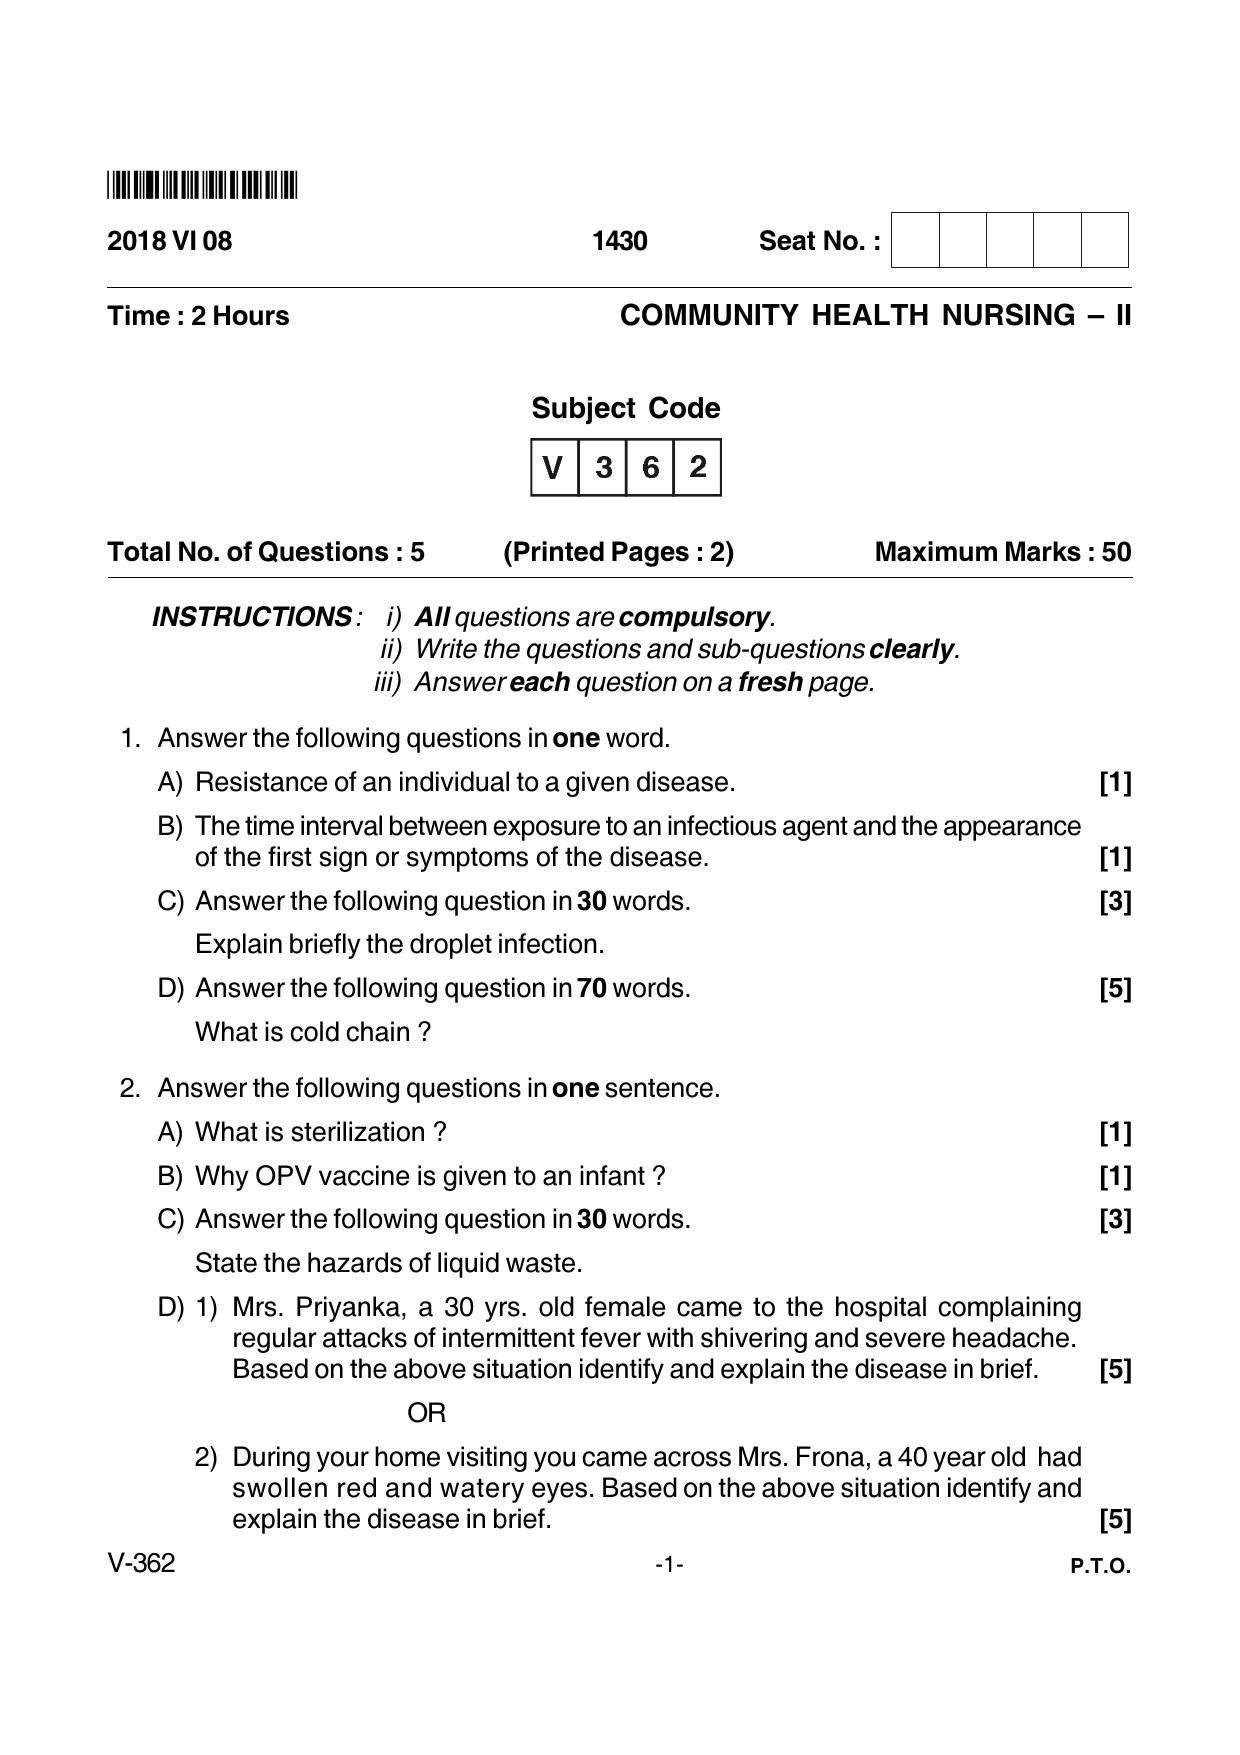 Goa Board Class 12 Community Health Nursing - II  Voc 362 (June 2018) Question Paper - Page 1